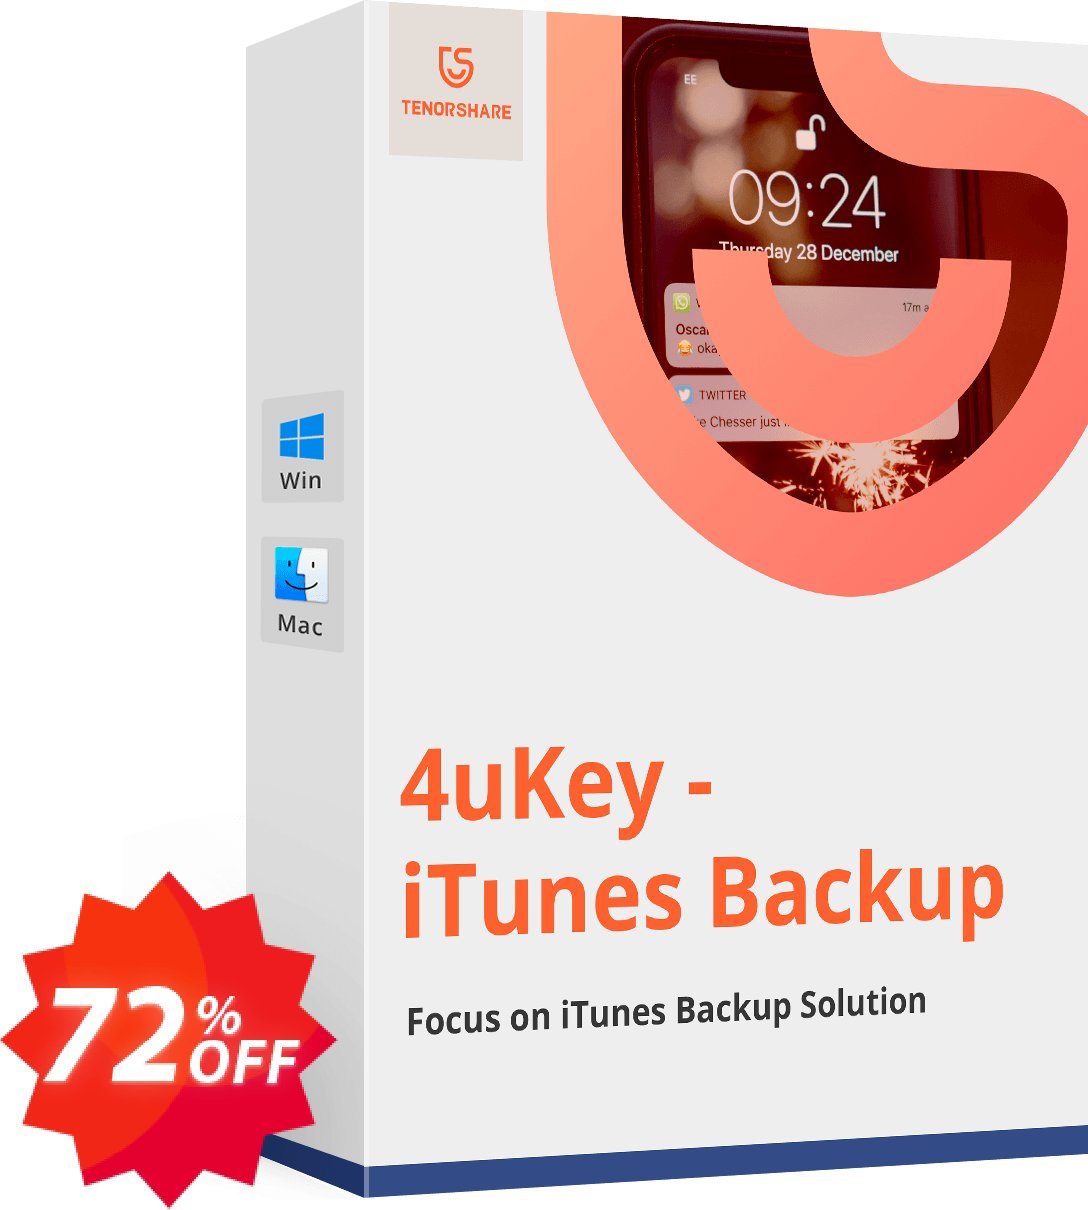 Tenorshare 4uKey iTunes Backup, Lifetime Plan  Coupon code 72% discount 